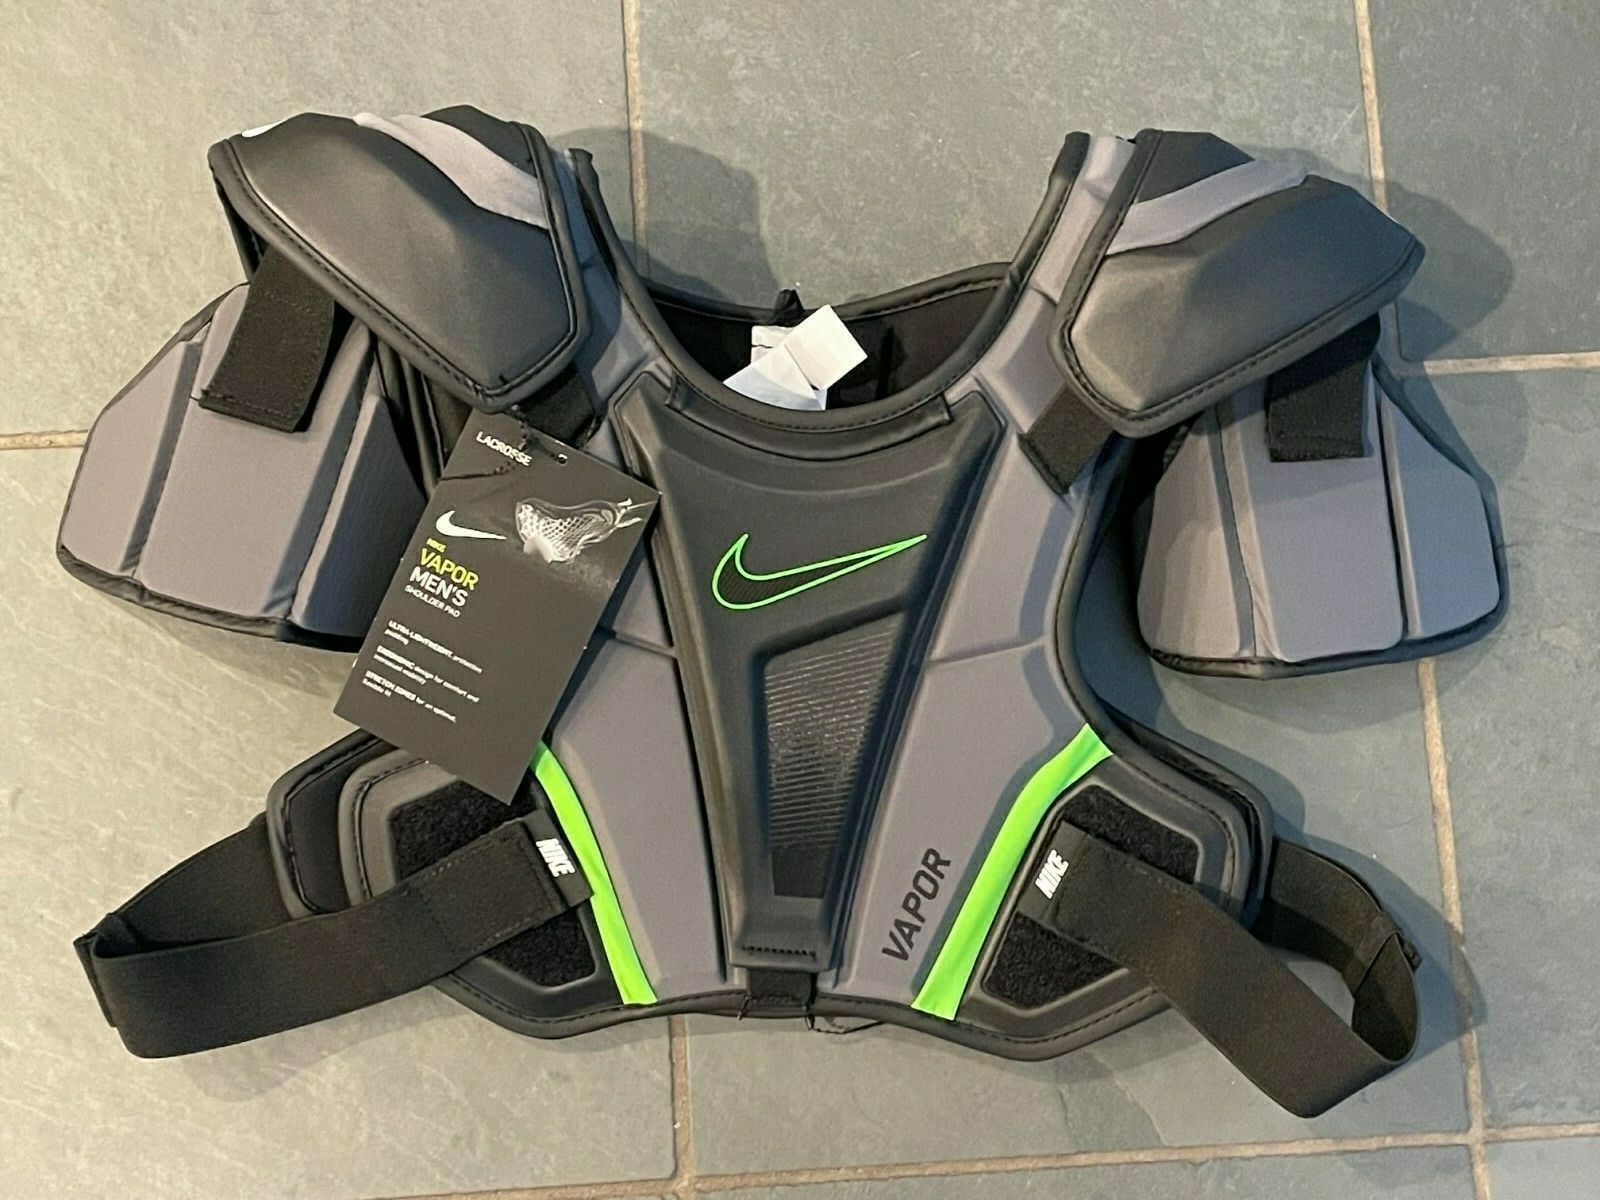 New W/ Tags Nike Vapor 2.0 Lacrosse Shoulder Pads Large Retail $130